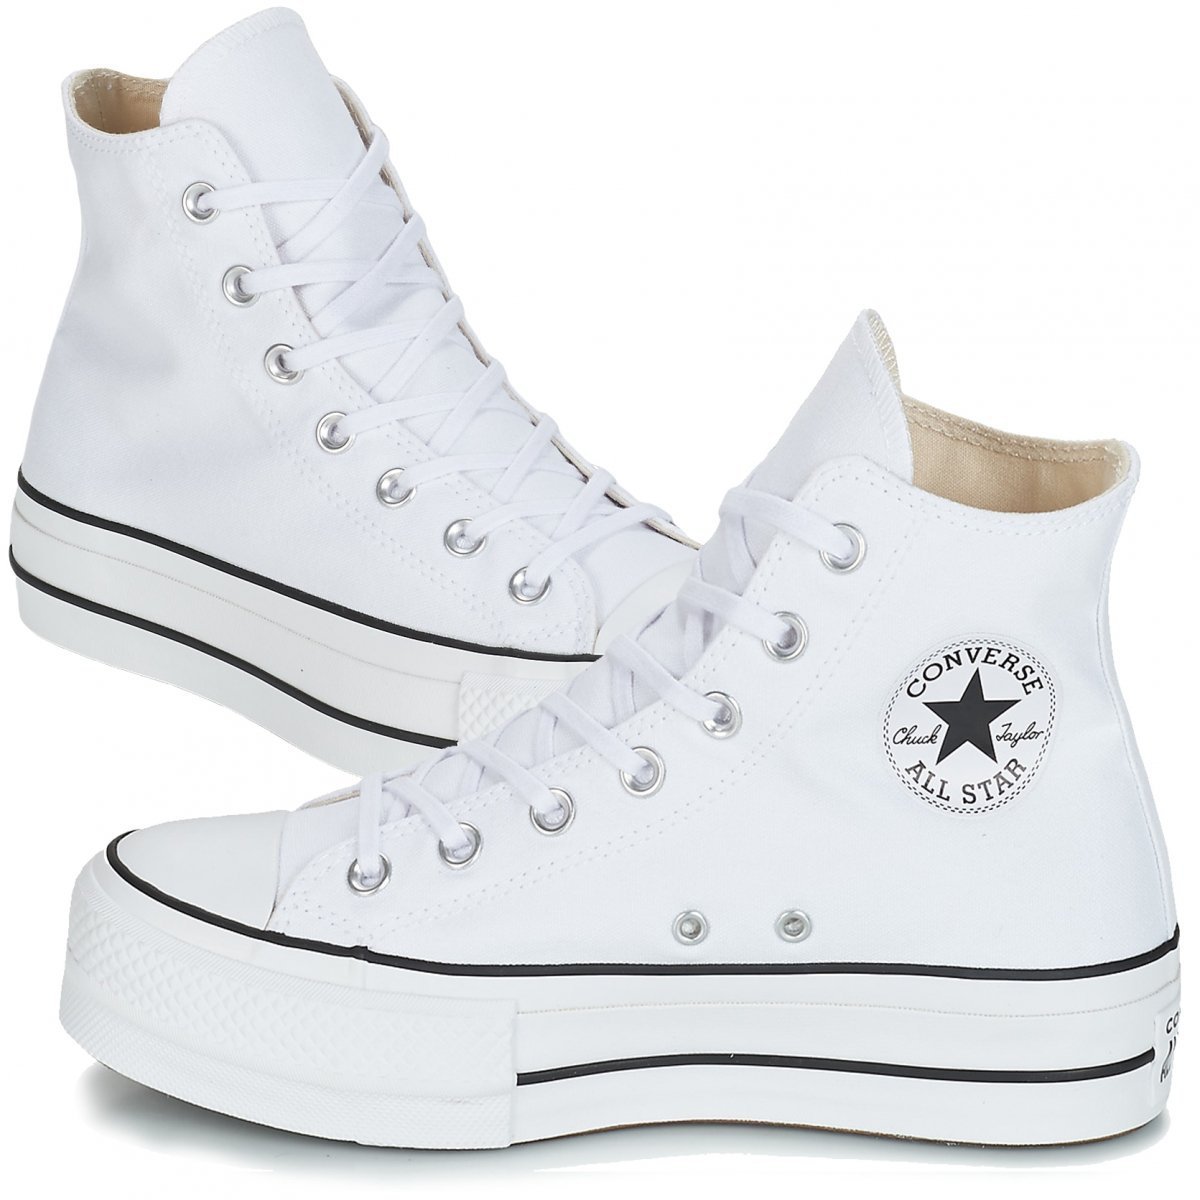 optioneel verder schaal Converse buty trampki damskie białe wysokie platforma 560846C 37 - Converse  | Sport Sklep EMPIK.COM